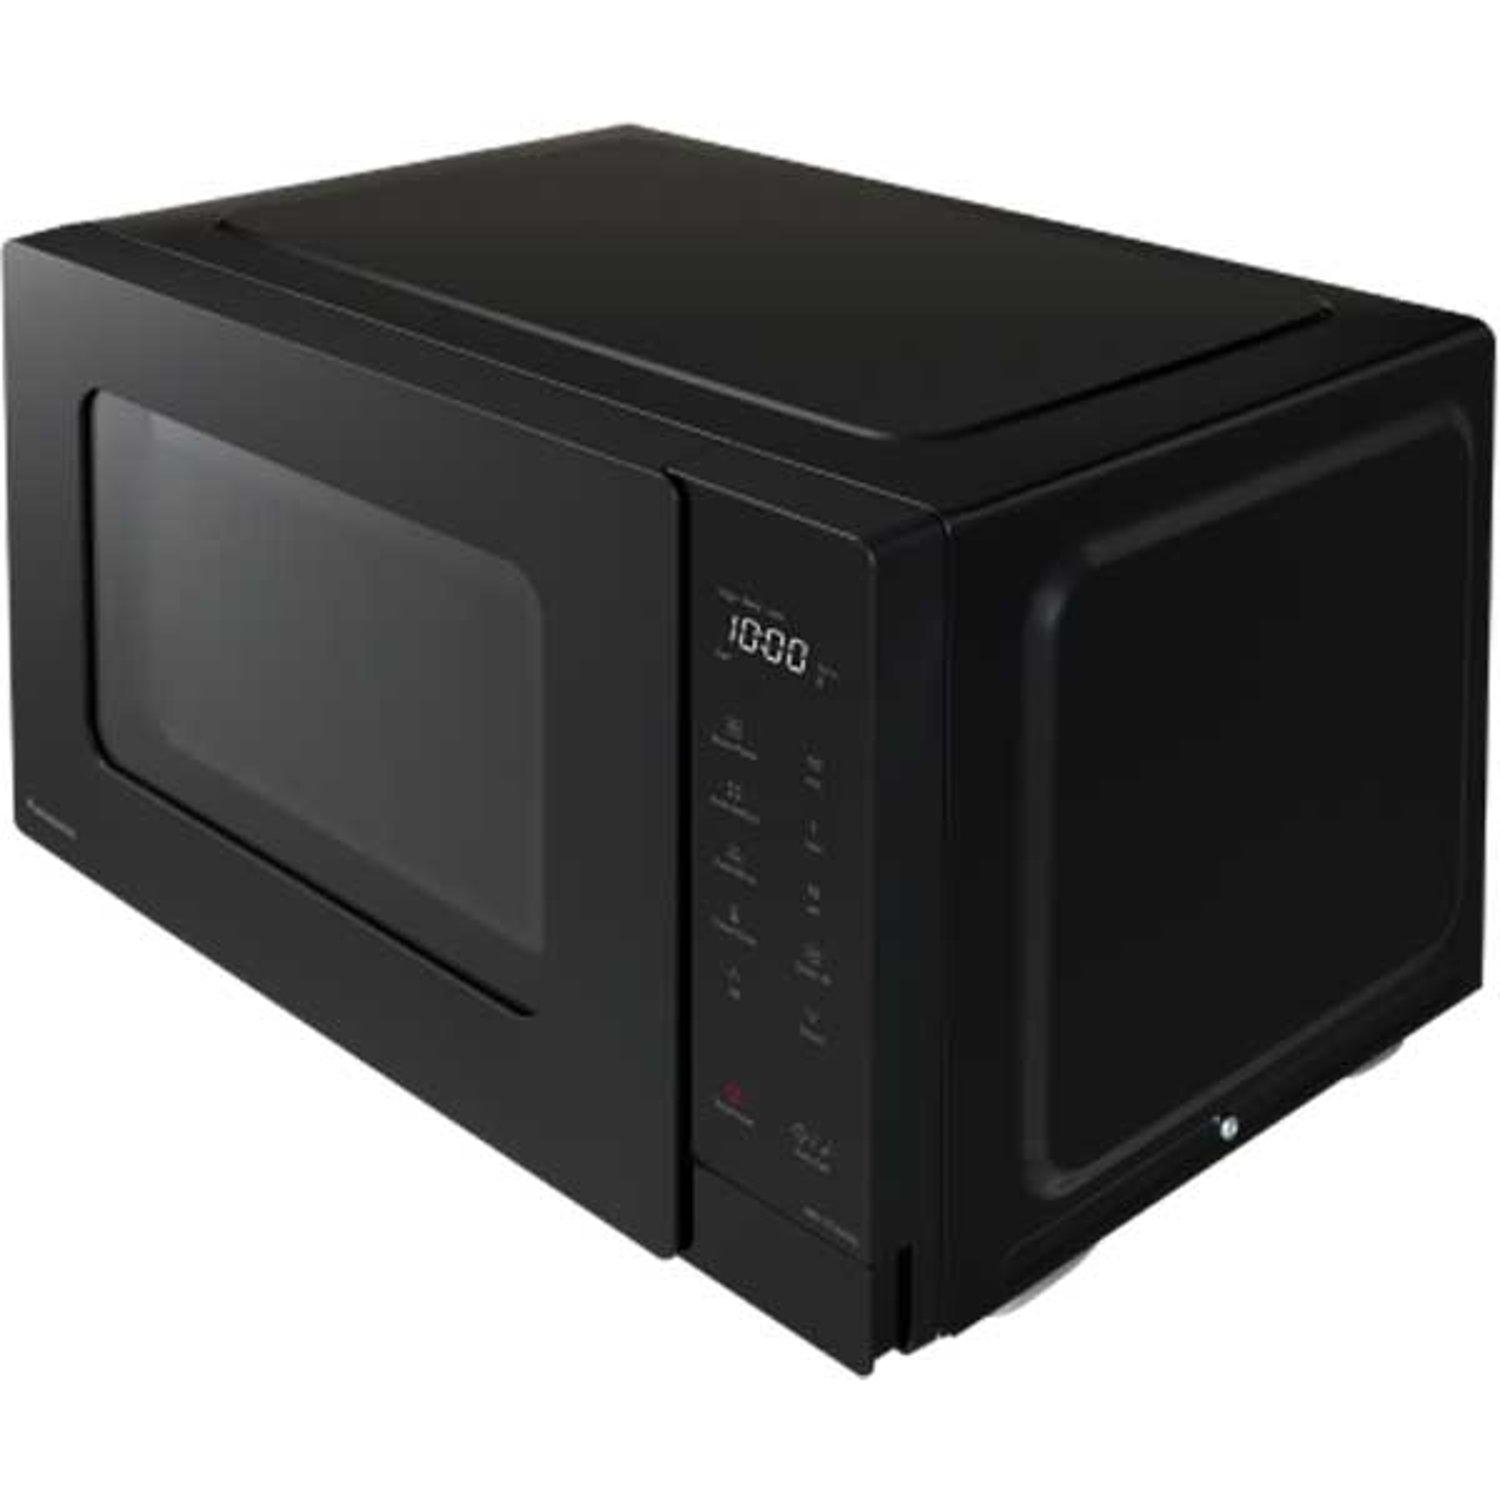 Clippasafe Microwave & Oven Lock Buy, Best Price in UAE, Dubai